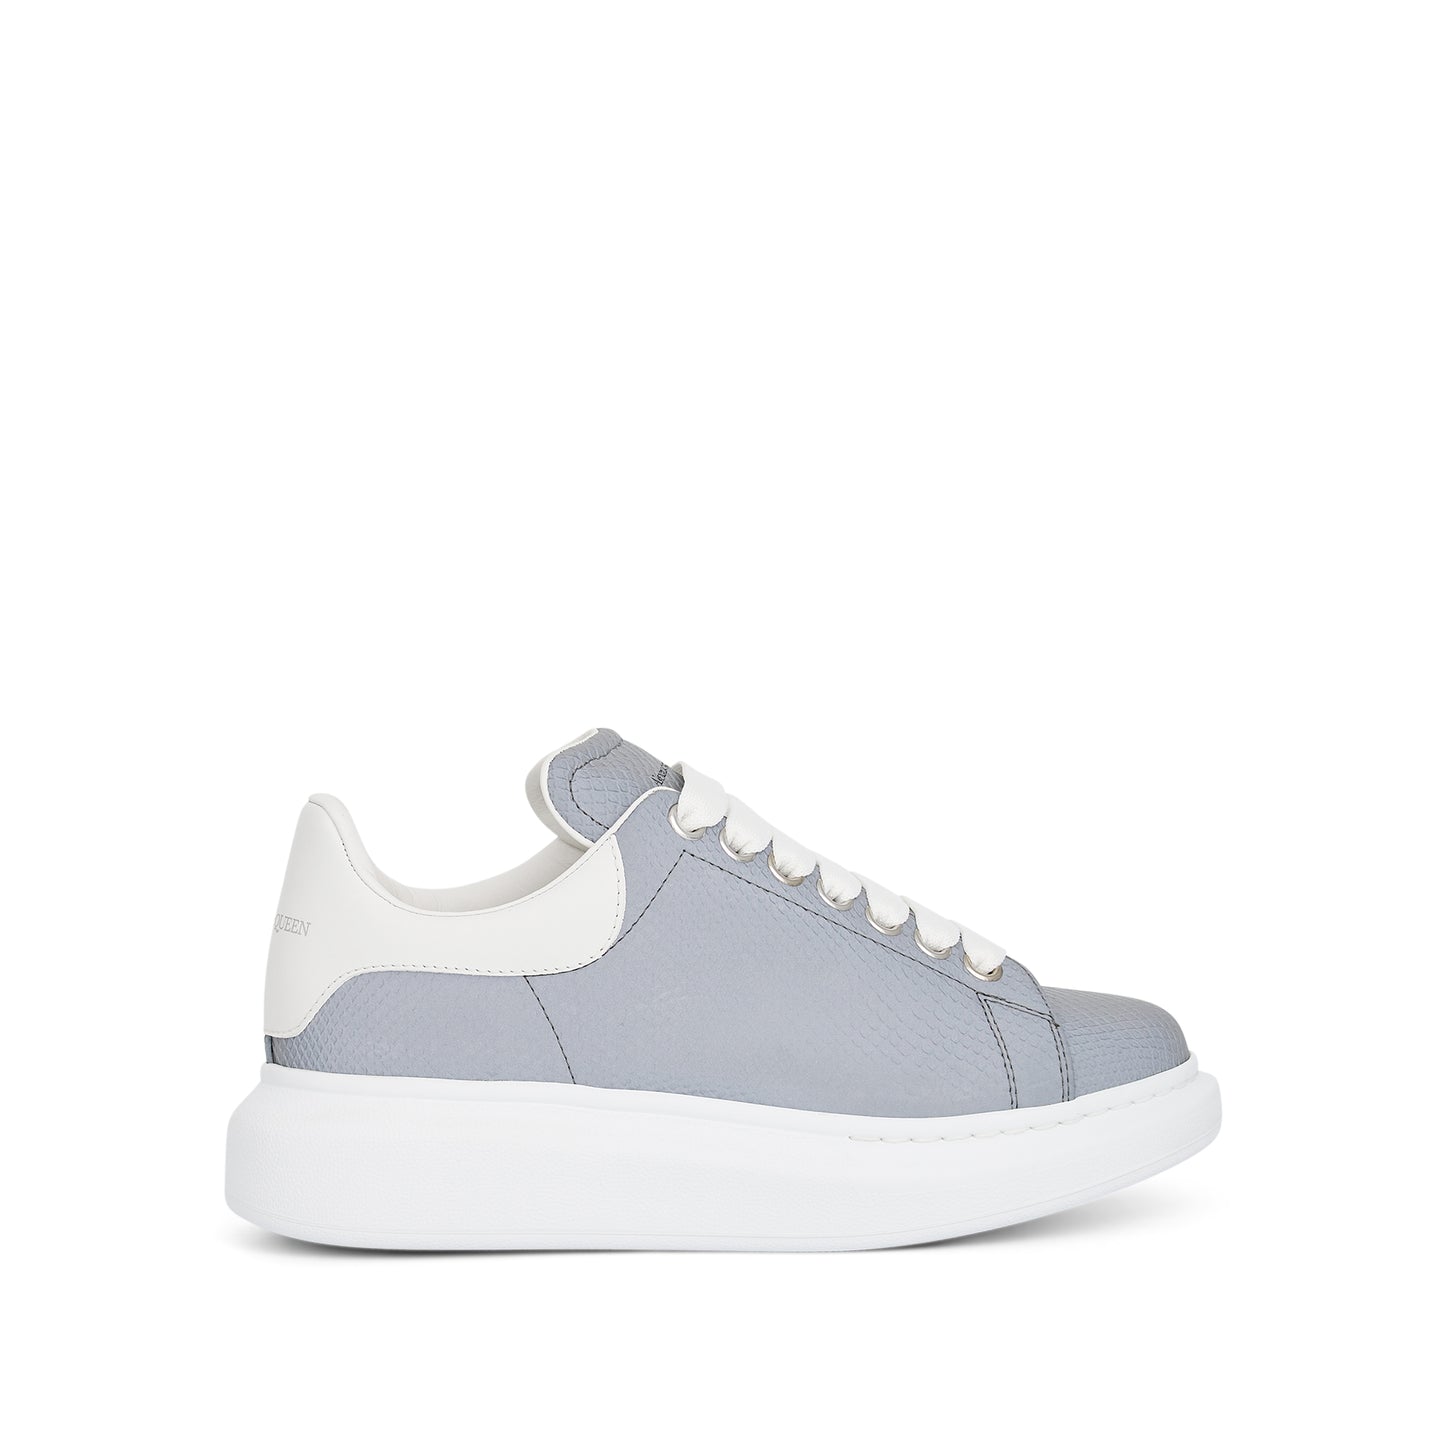 Larry Reflective Sneaker in Grey/White